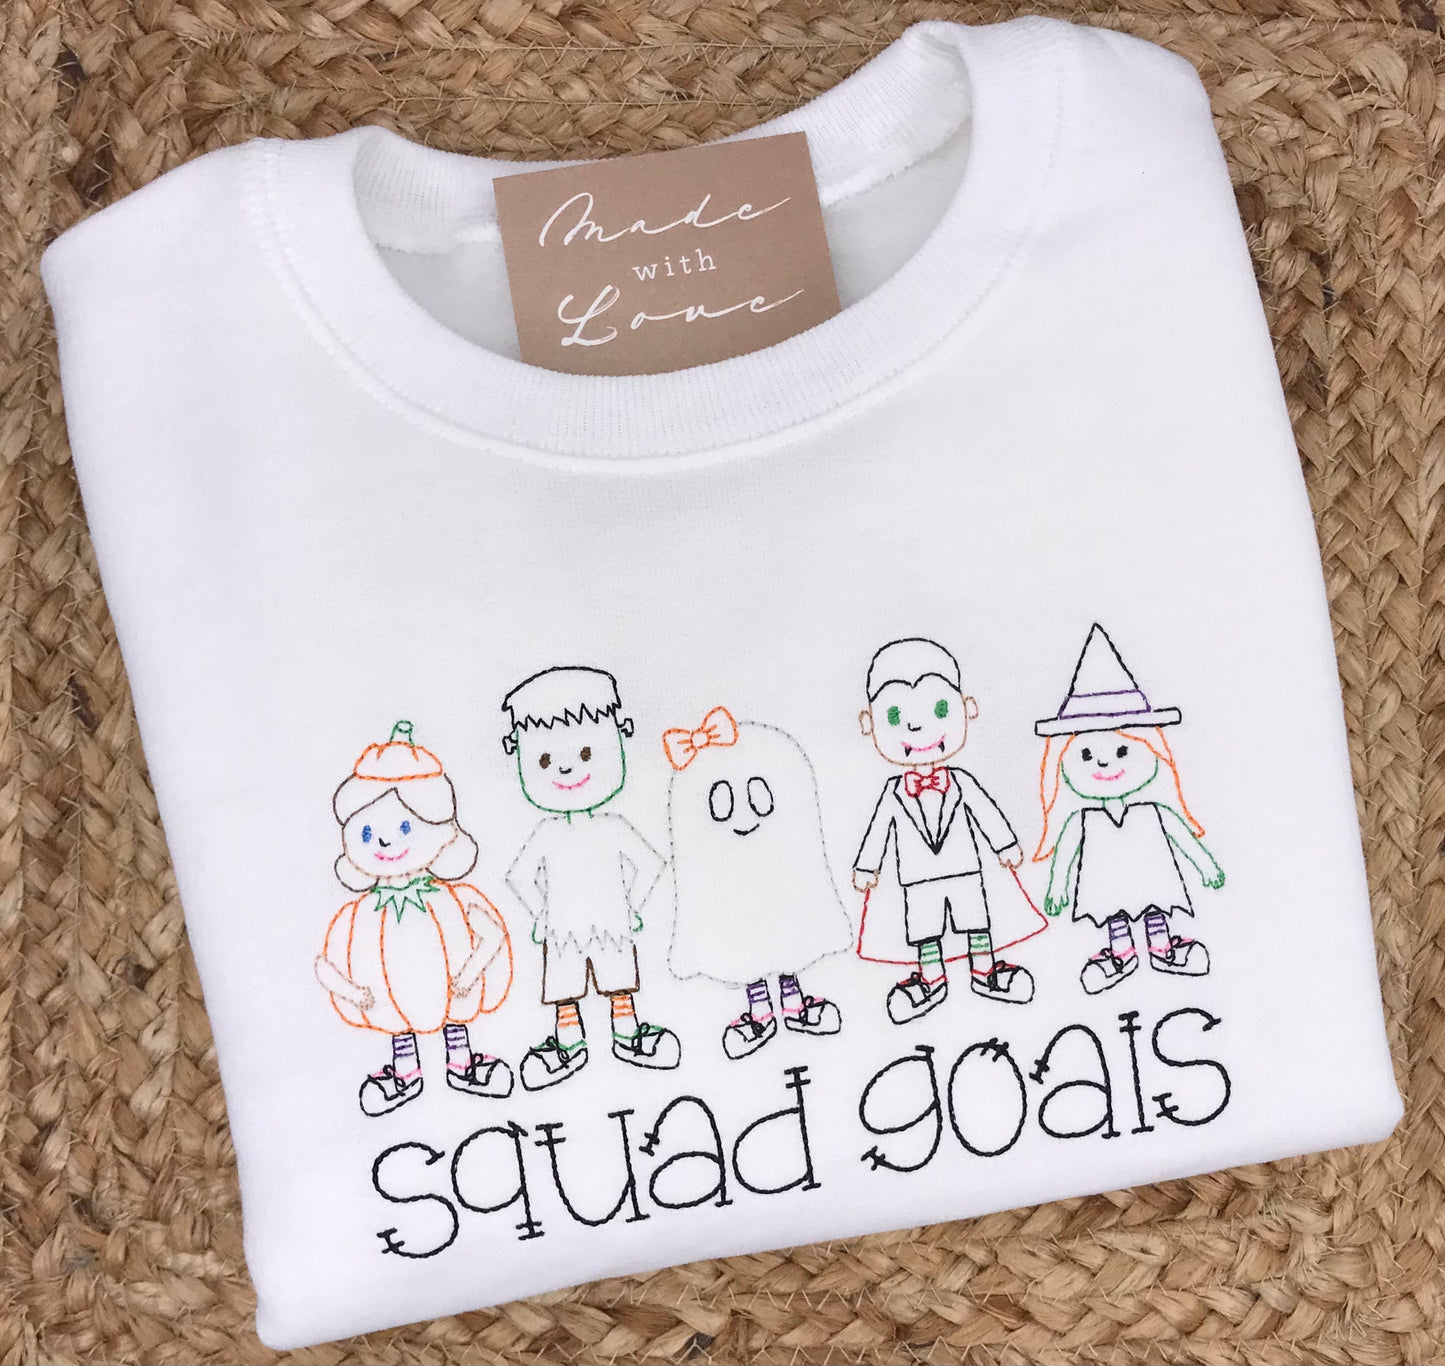 Ready to ship! Size 2/4 - Halloween Squad Goals Sweatshirt